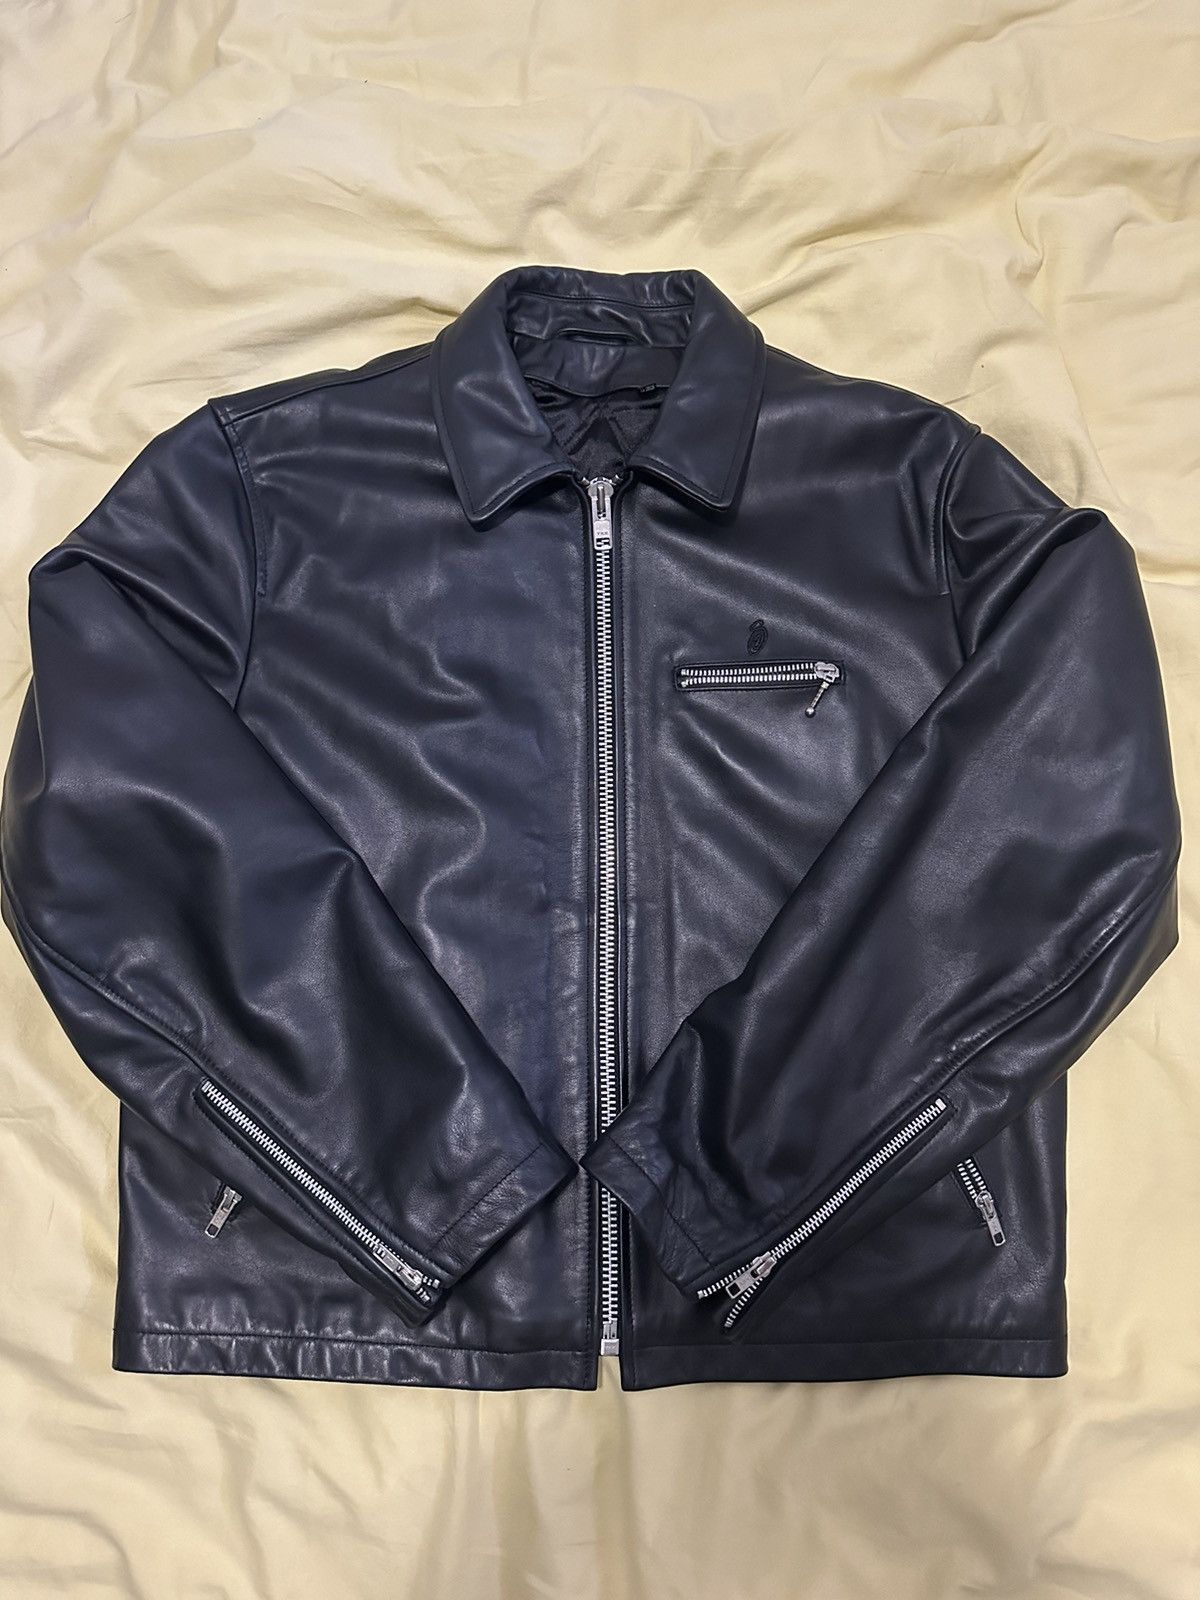 Stussy Stussy x Schott NYC Leather Racing Jacket | Grailed